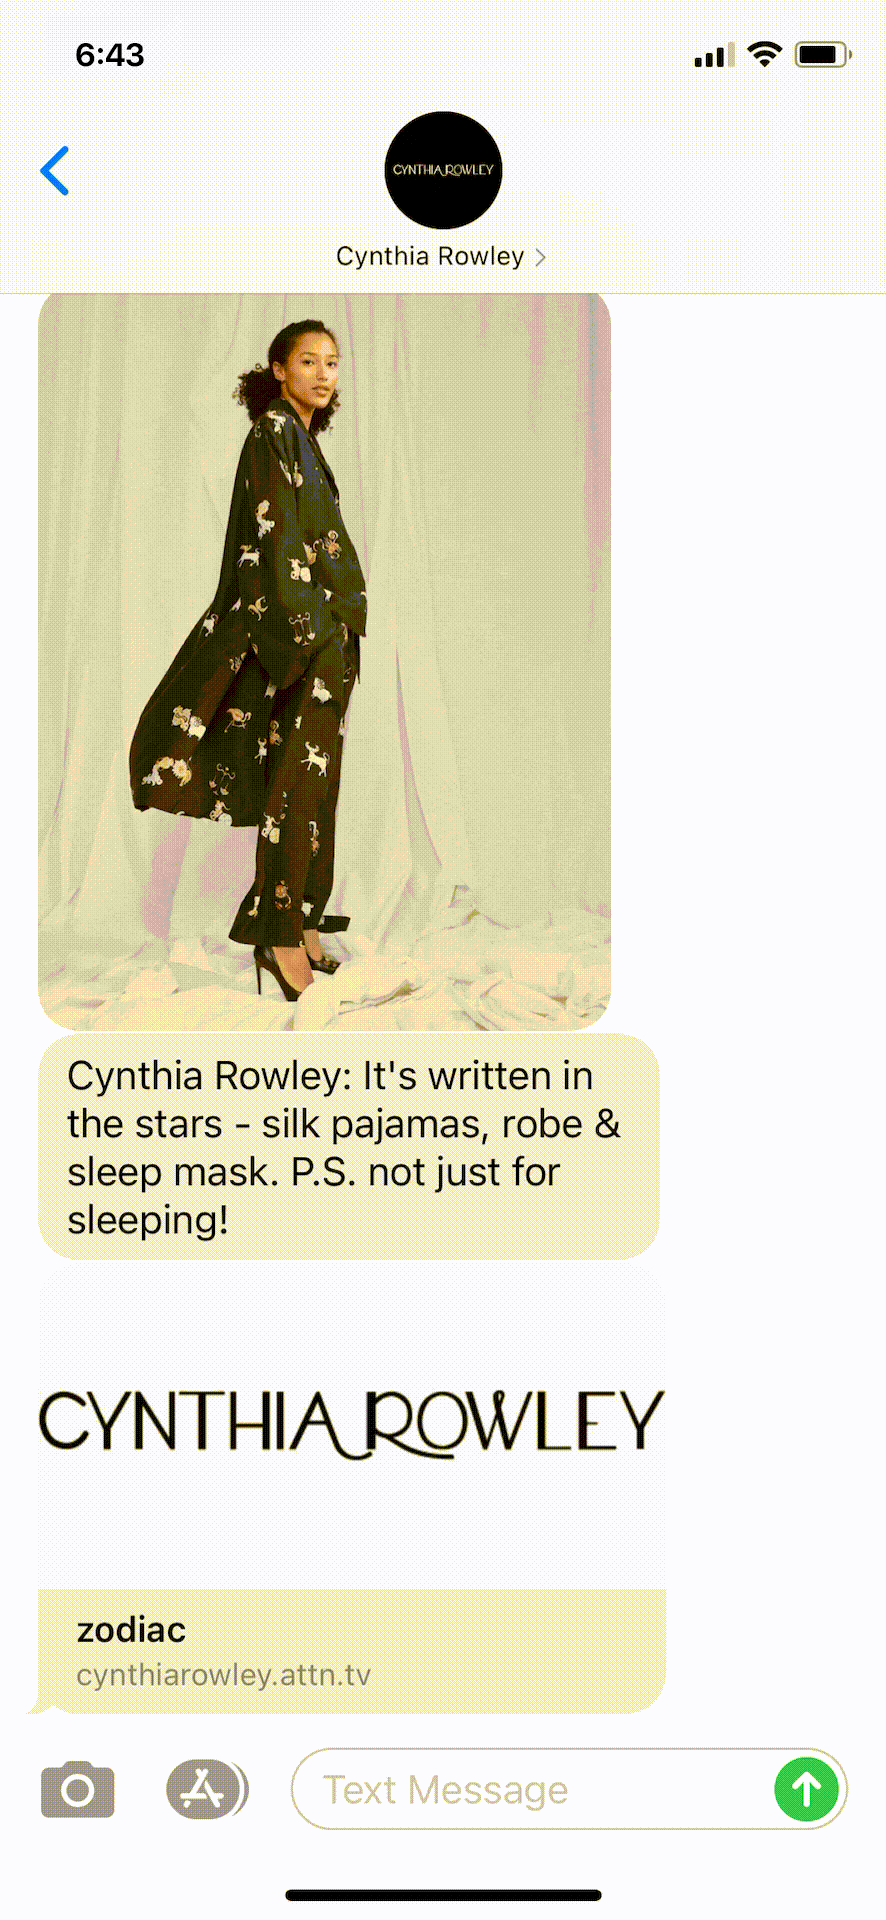 Cynthia-Rowley-Text-Message-Marketing-Example-02.12.2021